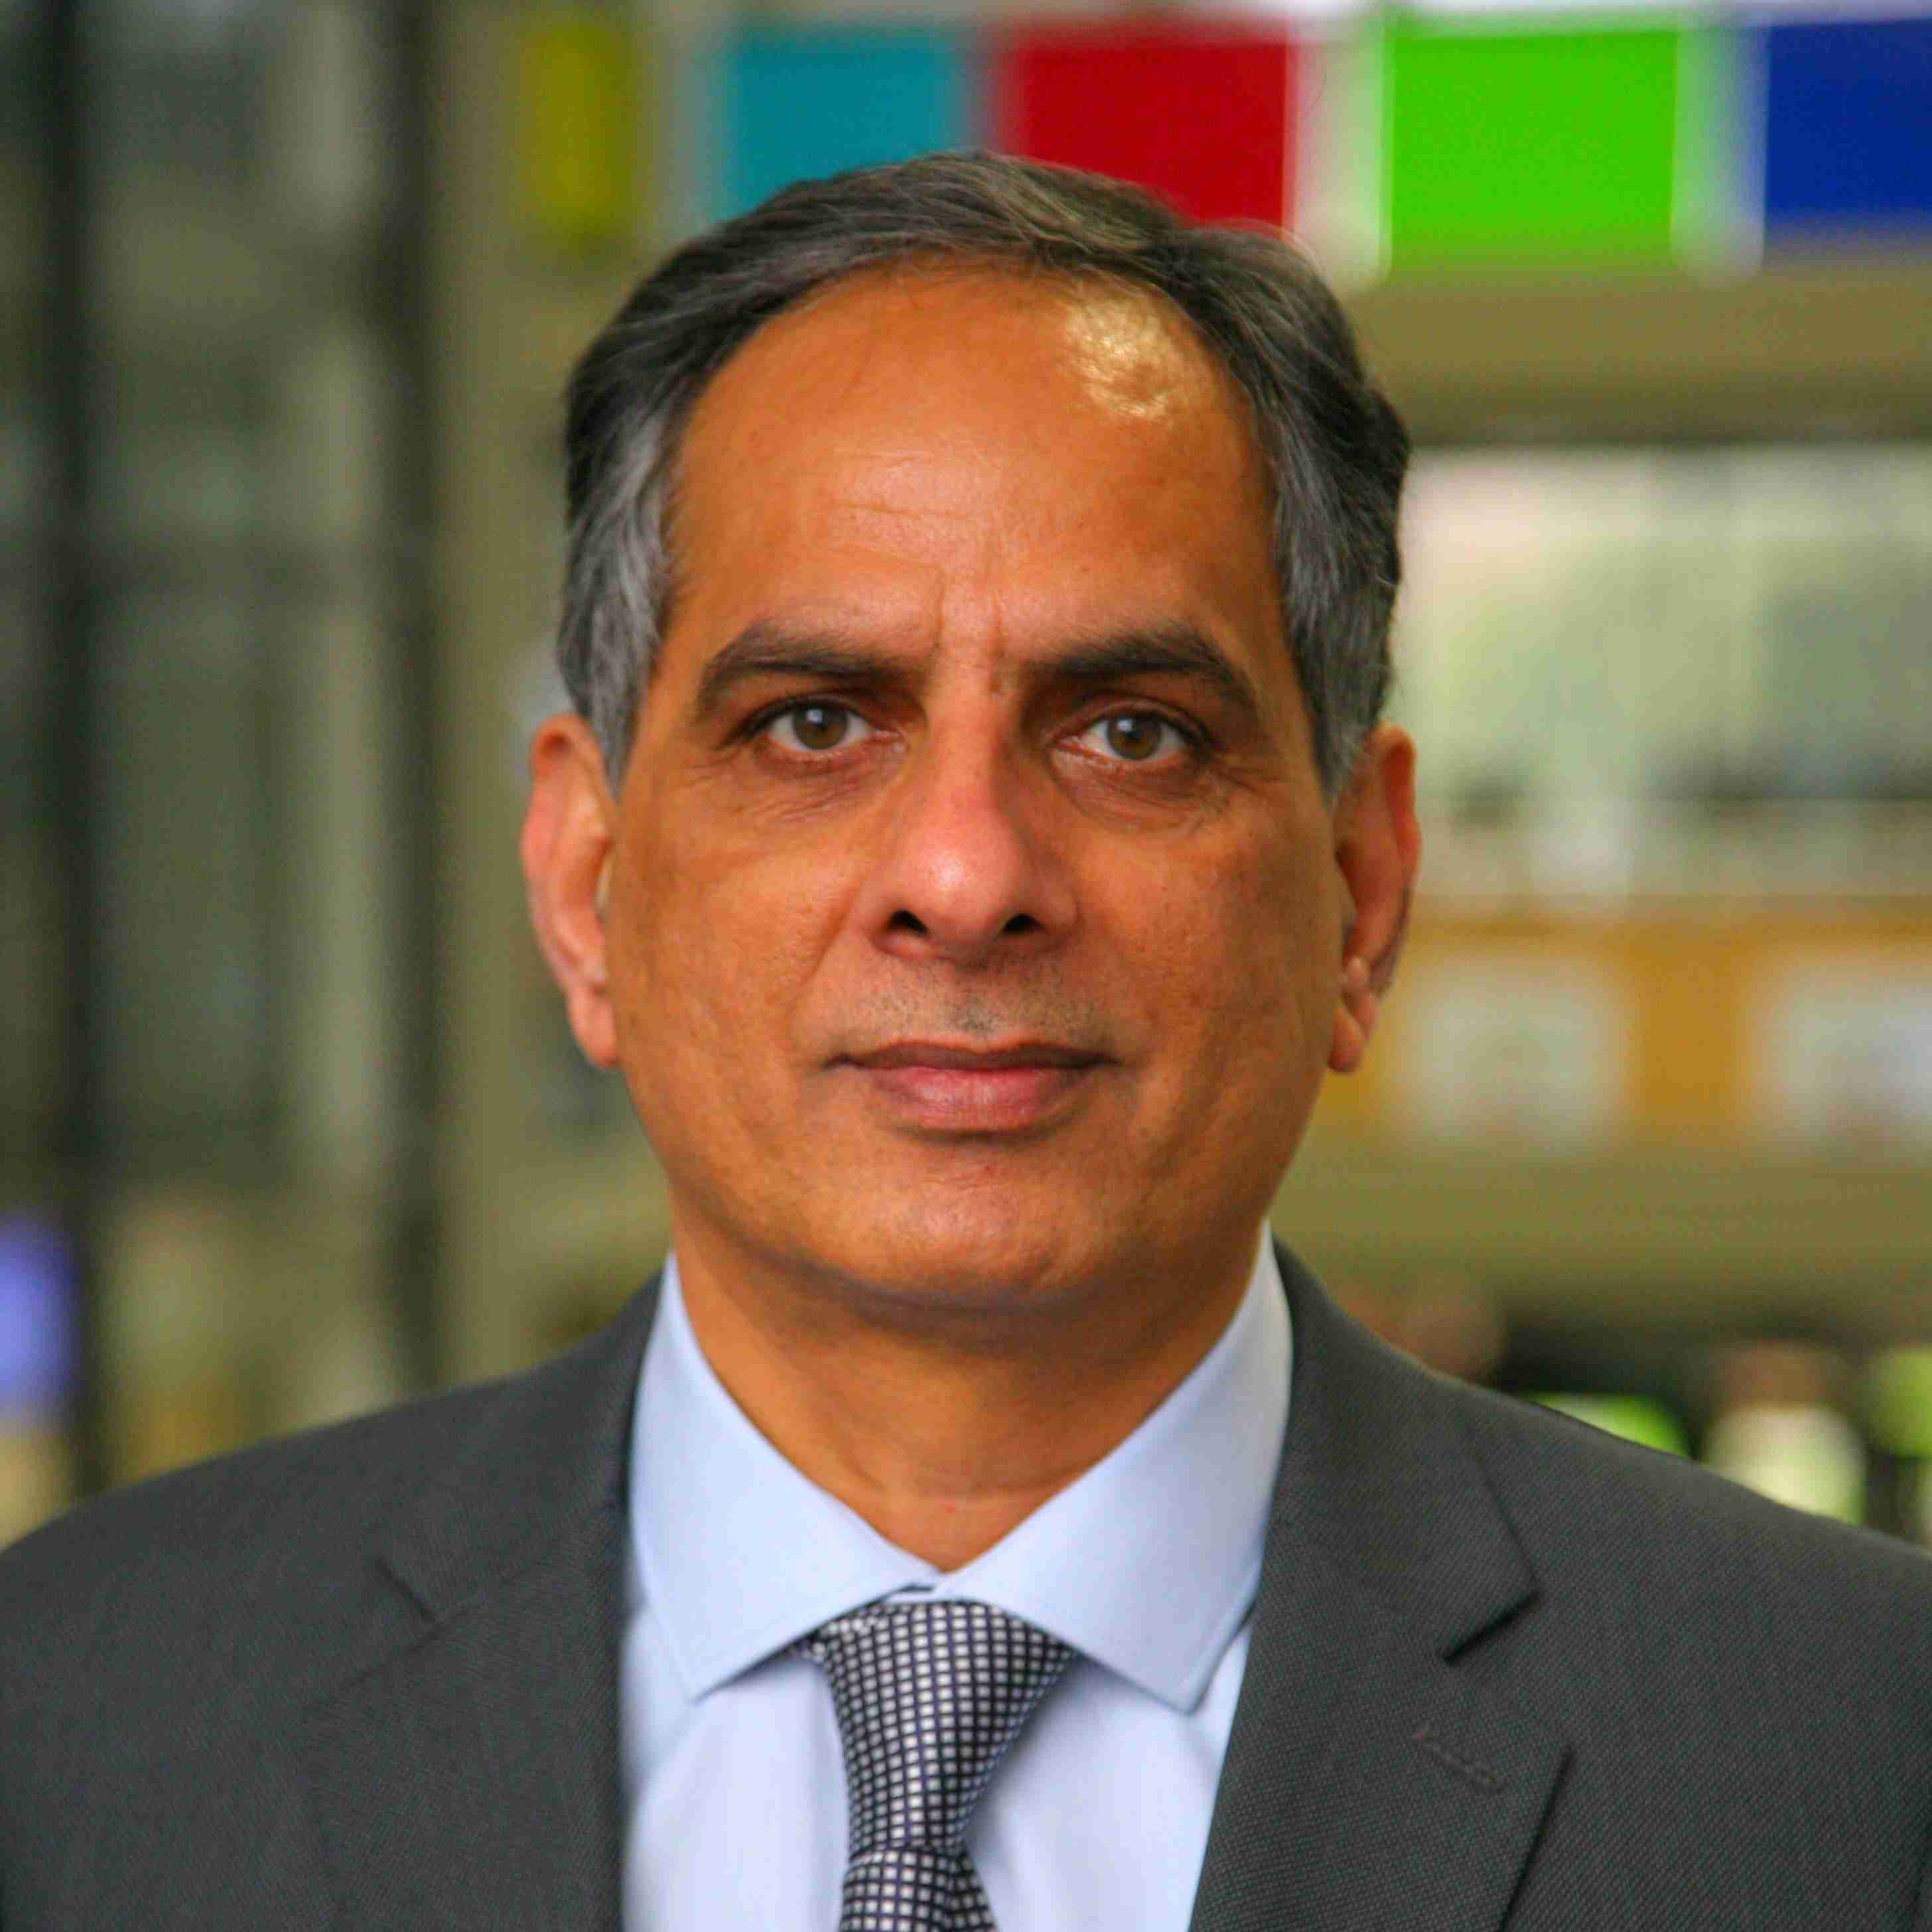 Profile image of Dr Farooq Ahmad